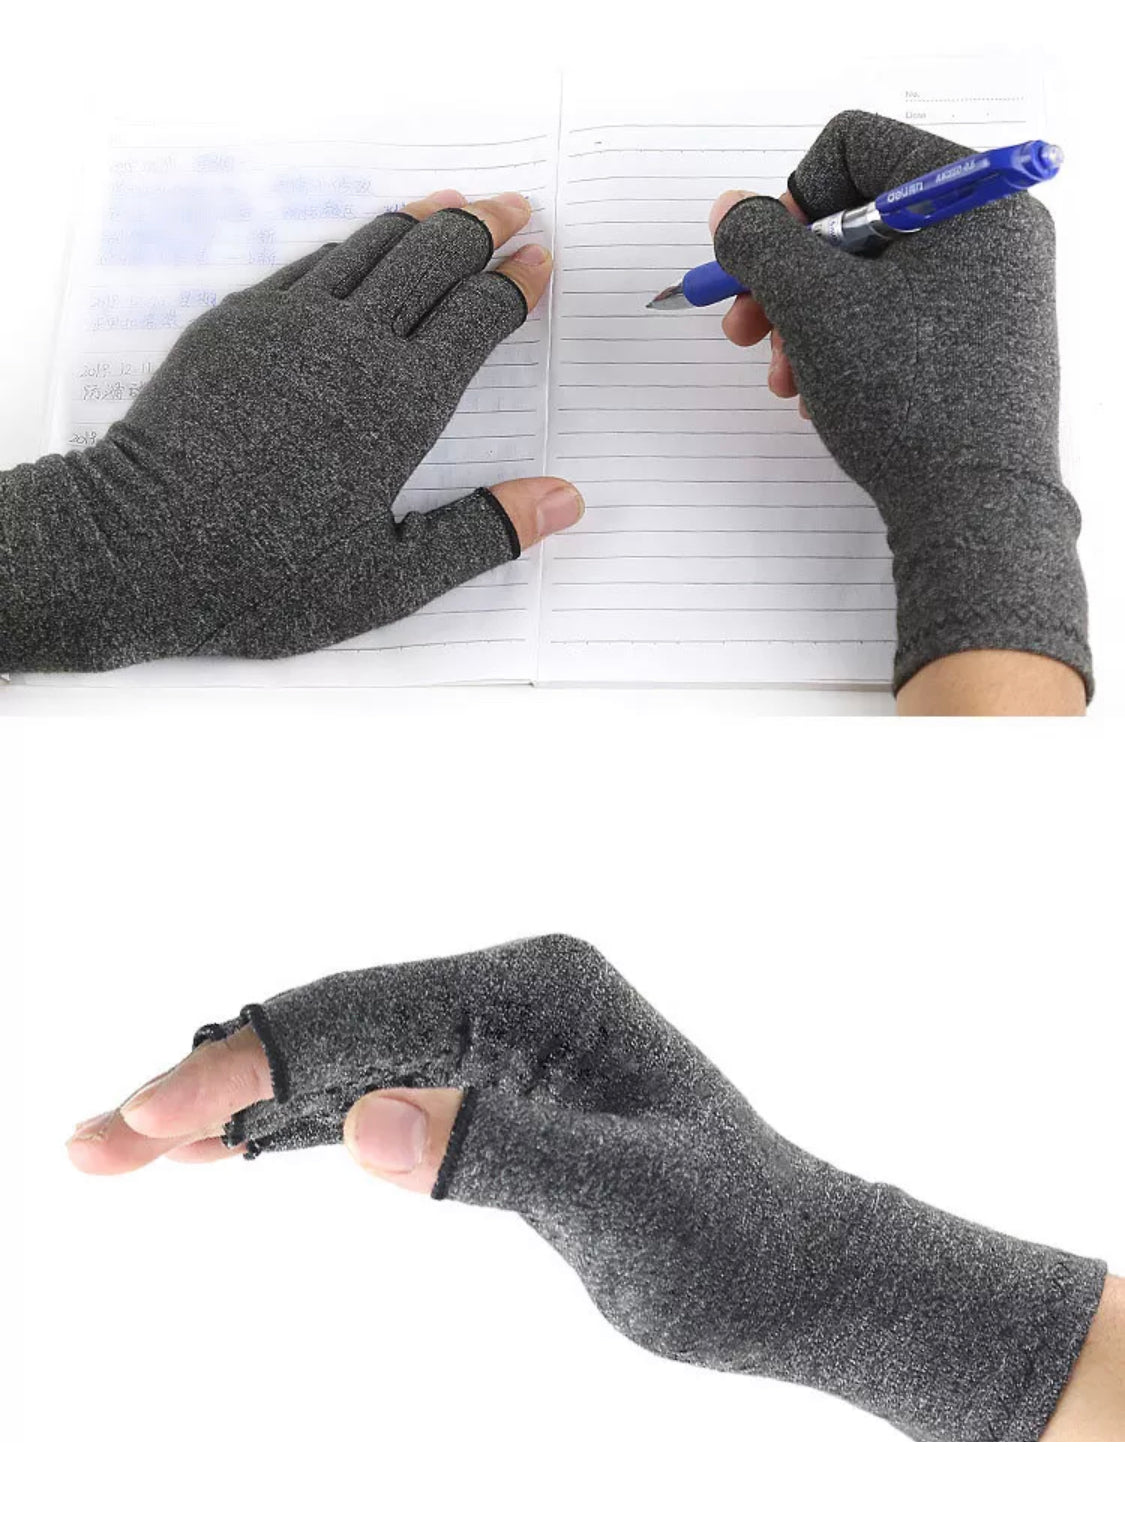 Compression gloves for arthritis, rheumatoid, arthritis osteoarthritis